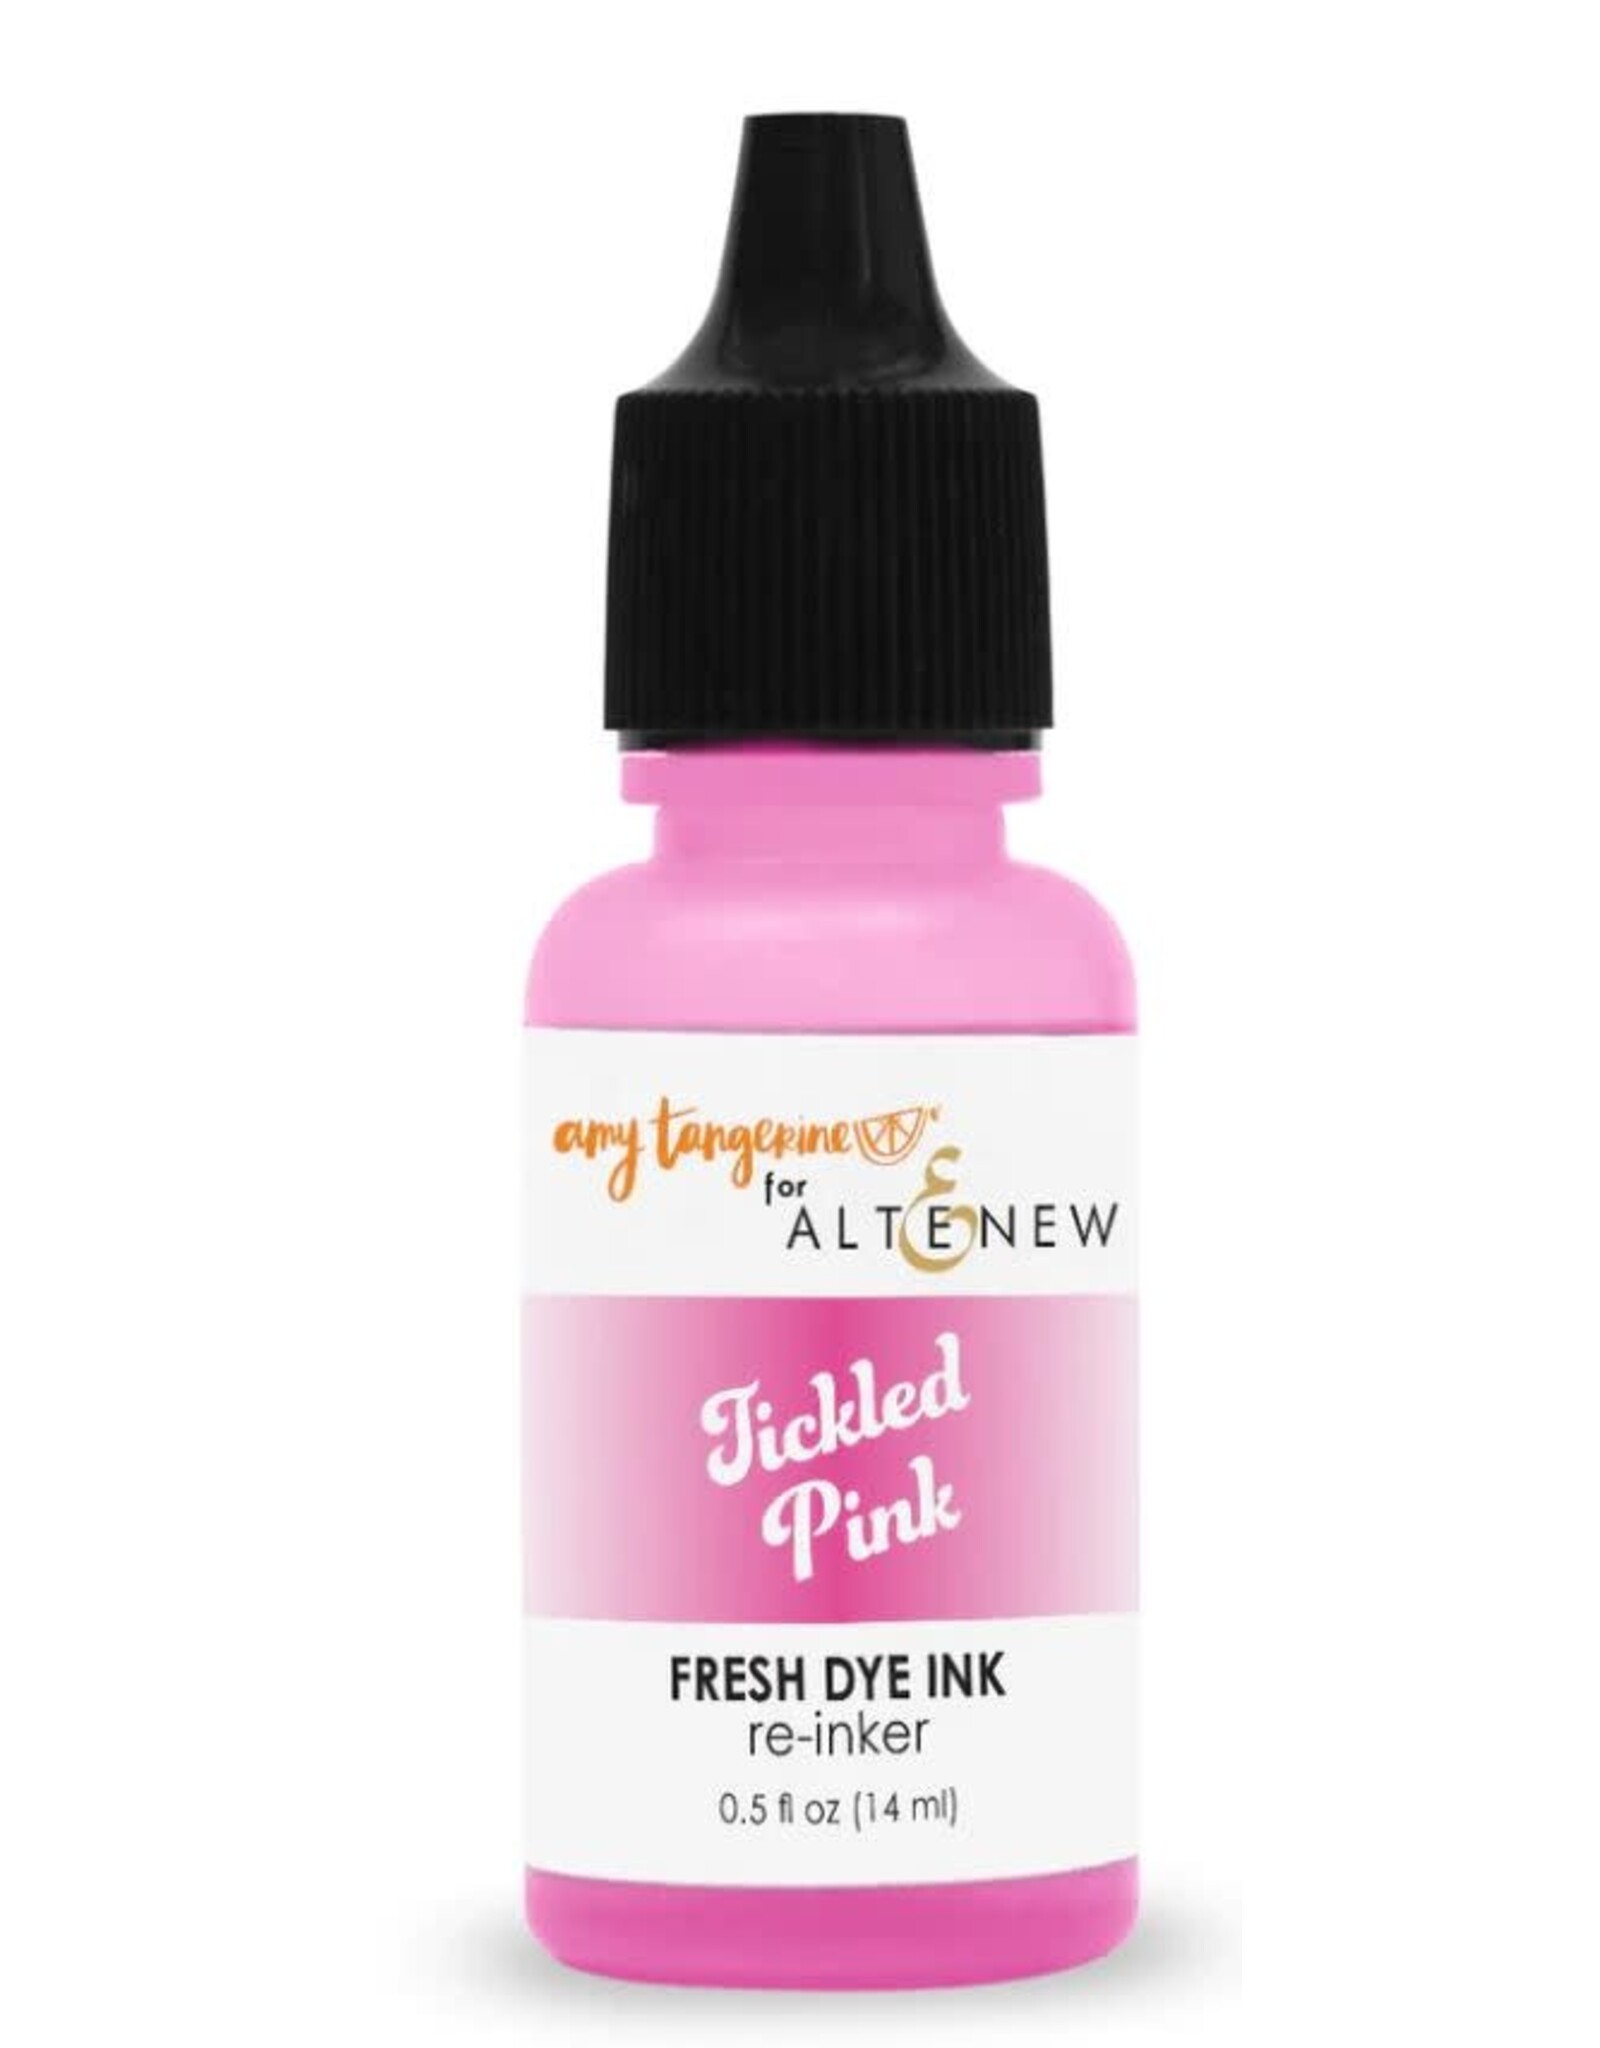 ALTENEW Amy Tangerine for Altenew-Summer Dreams Fresh Dye Ink Re-inker - Tickled Pink